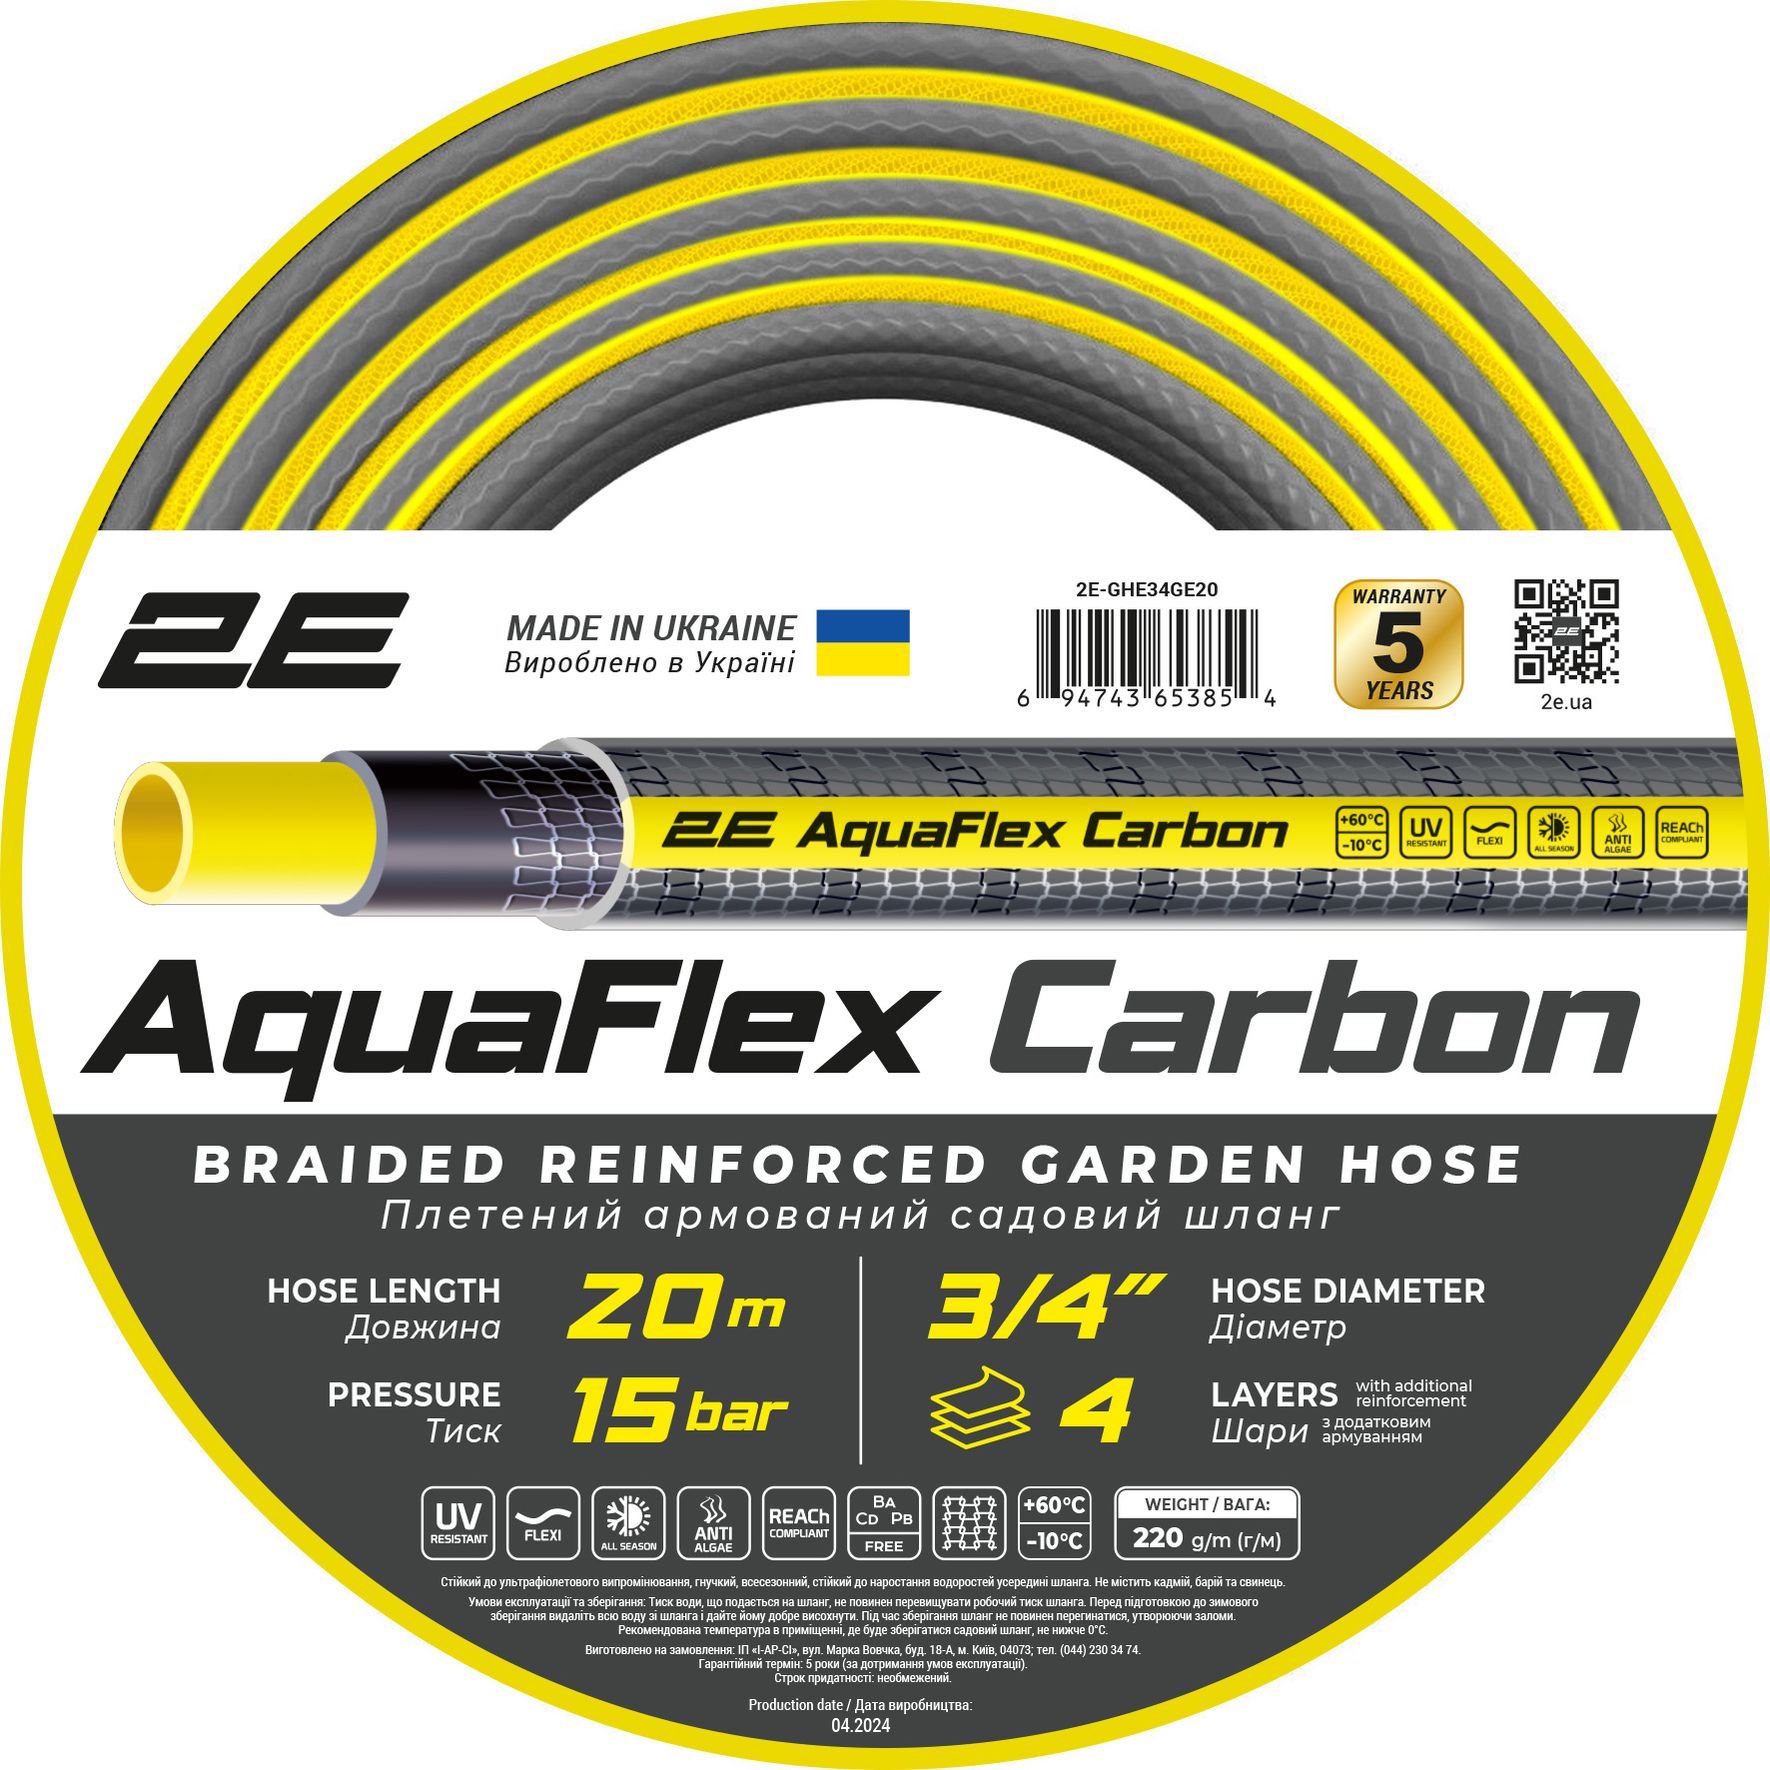 Шланг садовый 2Е AquaFlex Carbon 3/4" 4 слоя 20 м (2E-GHE34GE20) - фото 1